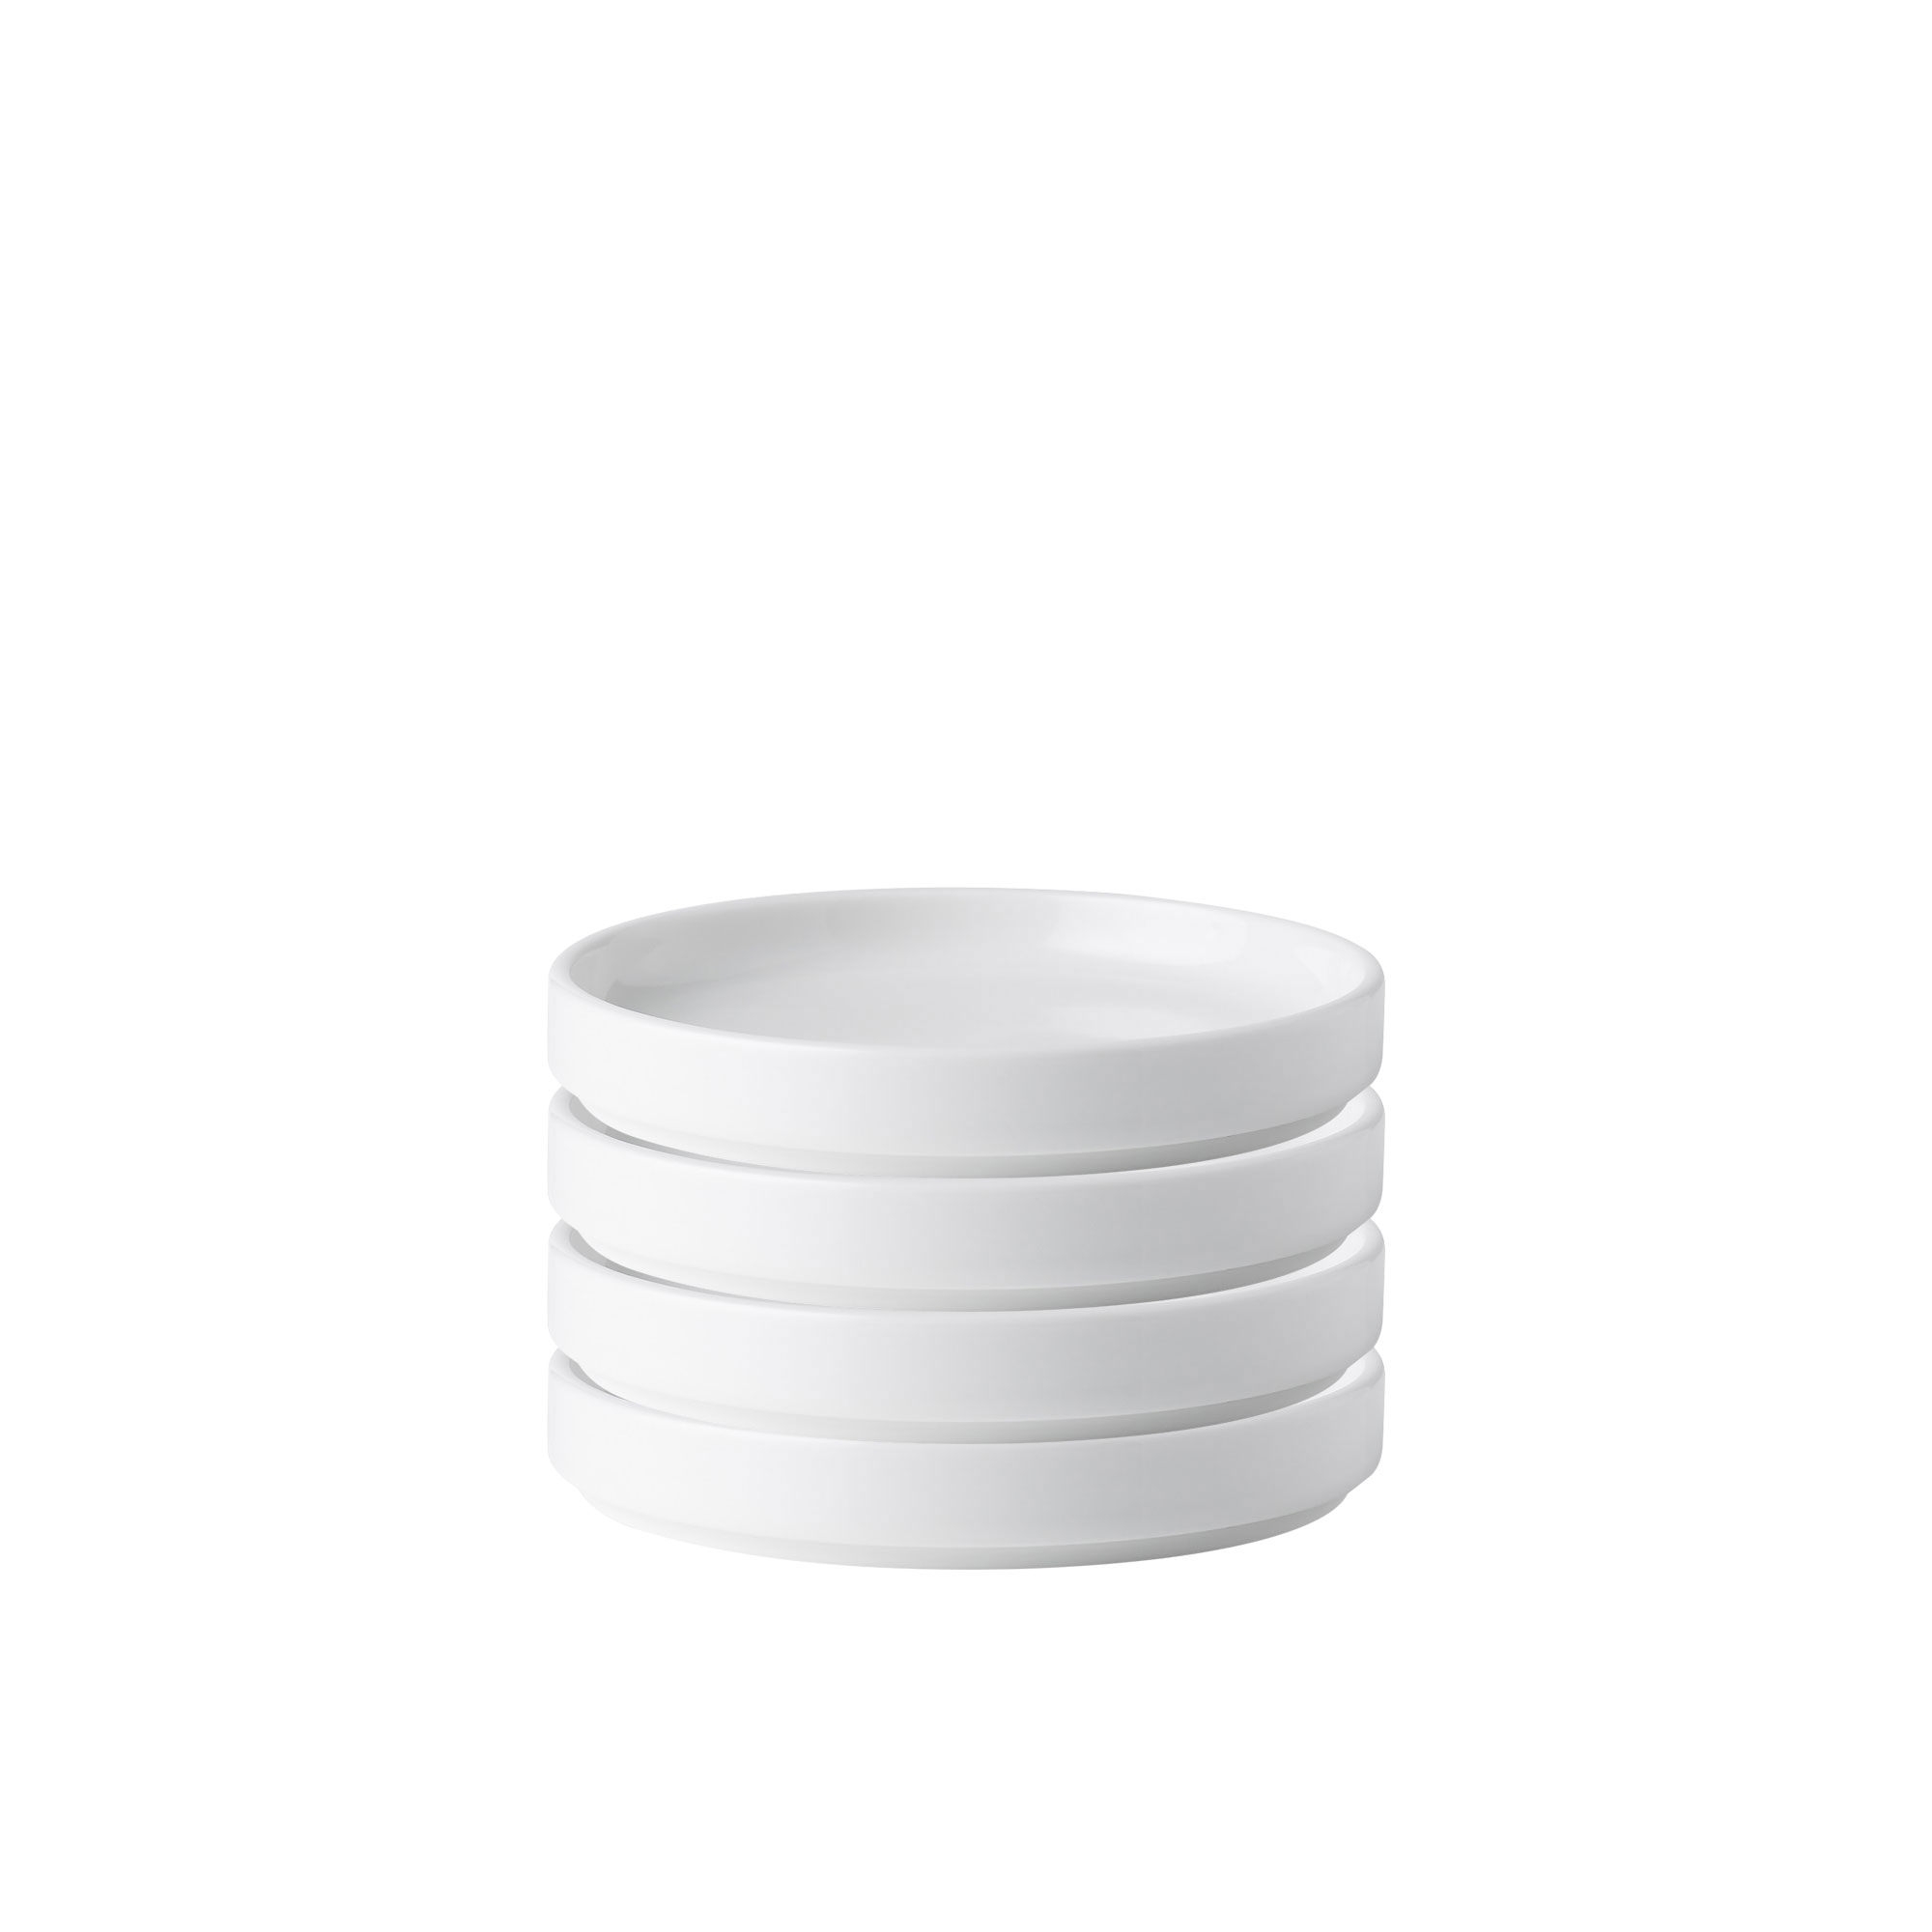 Noritake Stax White Small Plate Set of 4 Image 1